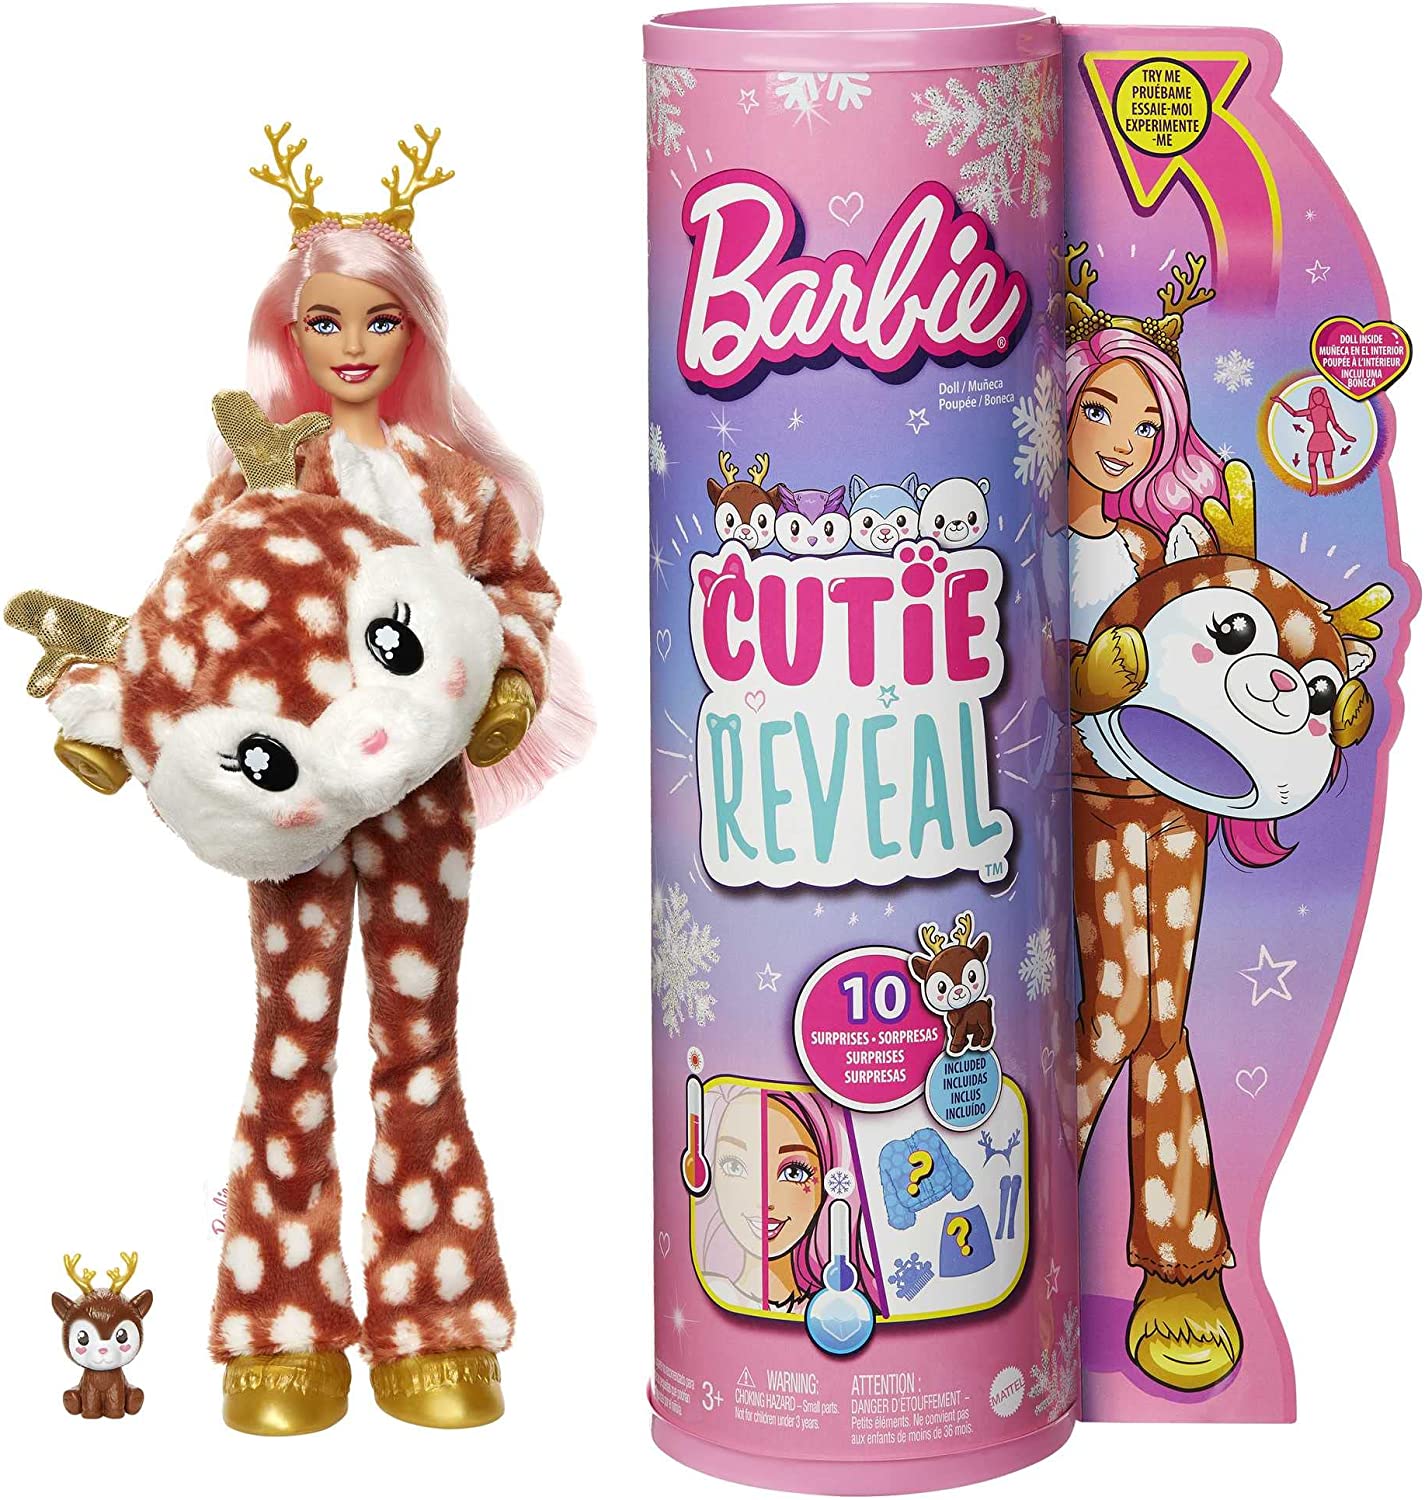 Barbie Cutie Reveal Doll Deer lelle HJL61